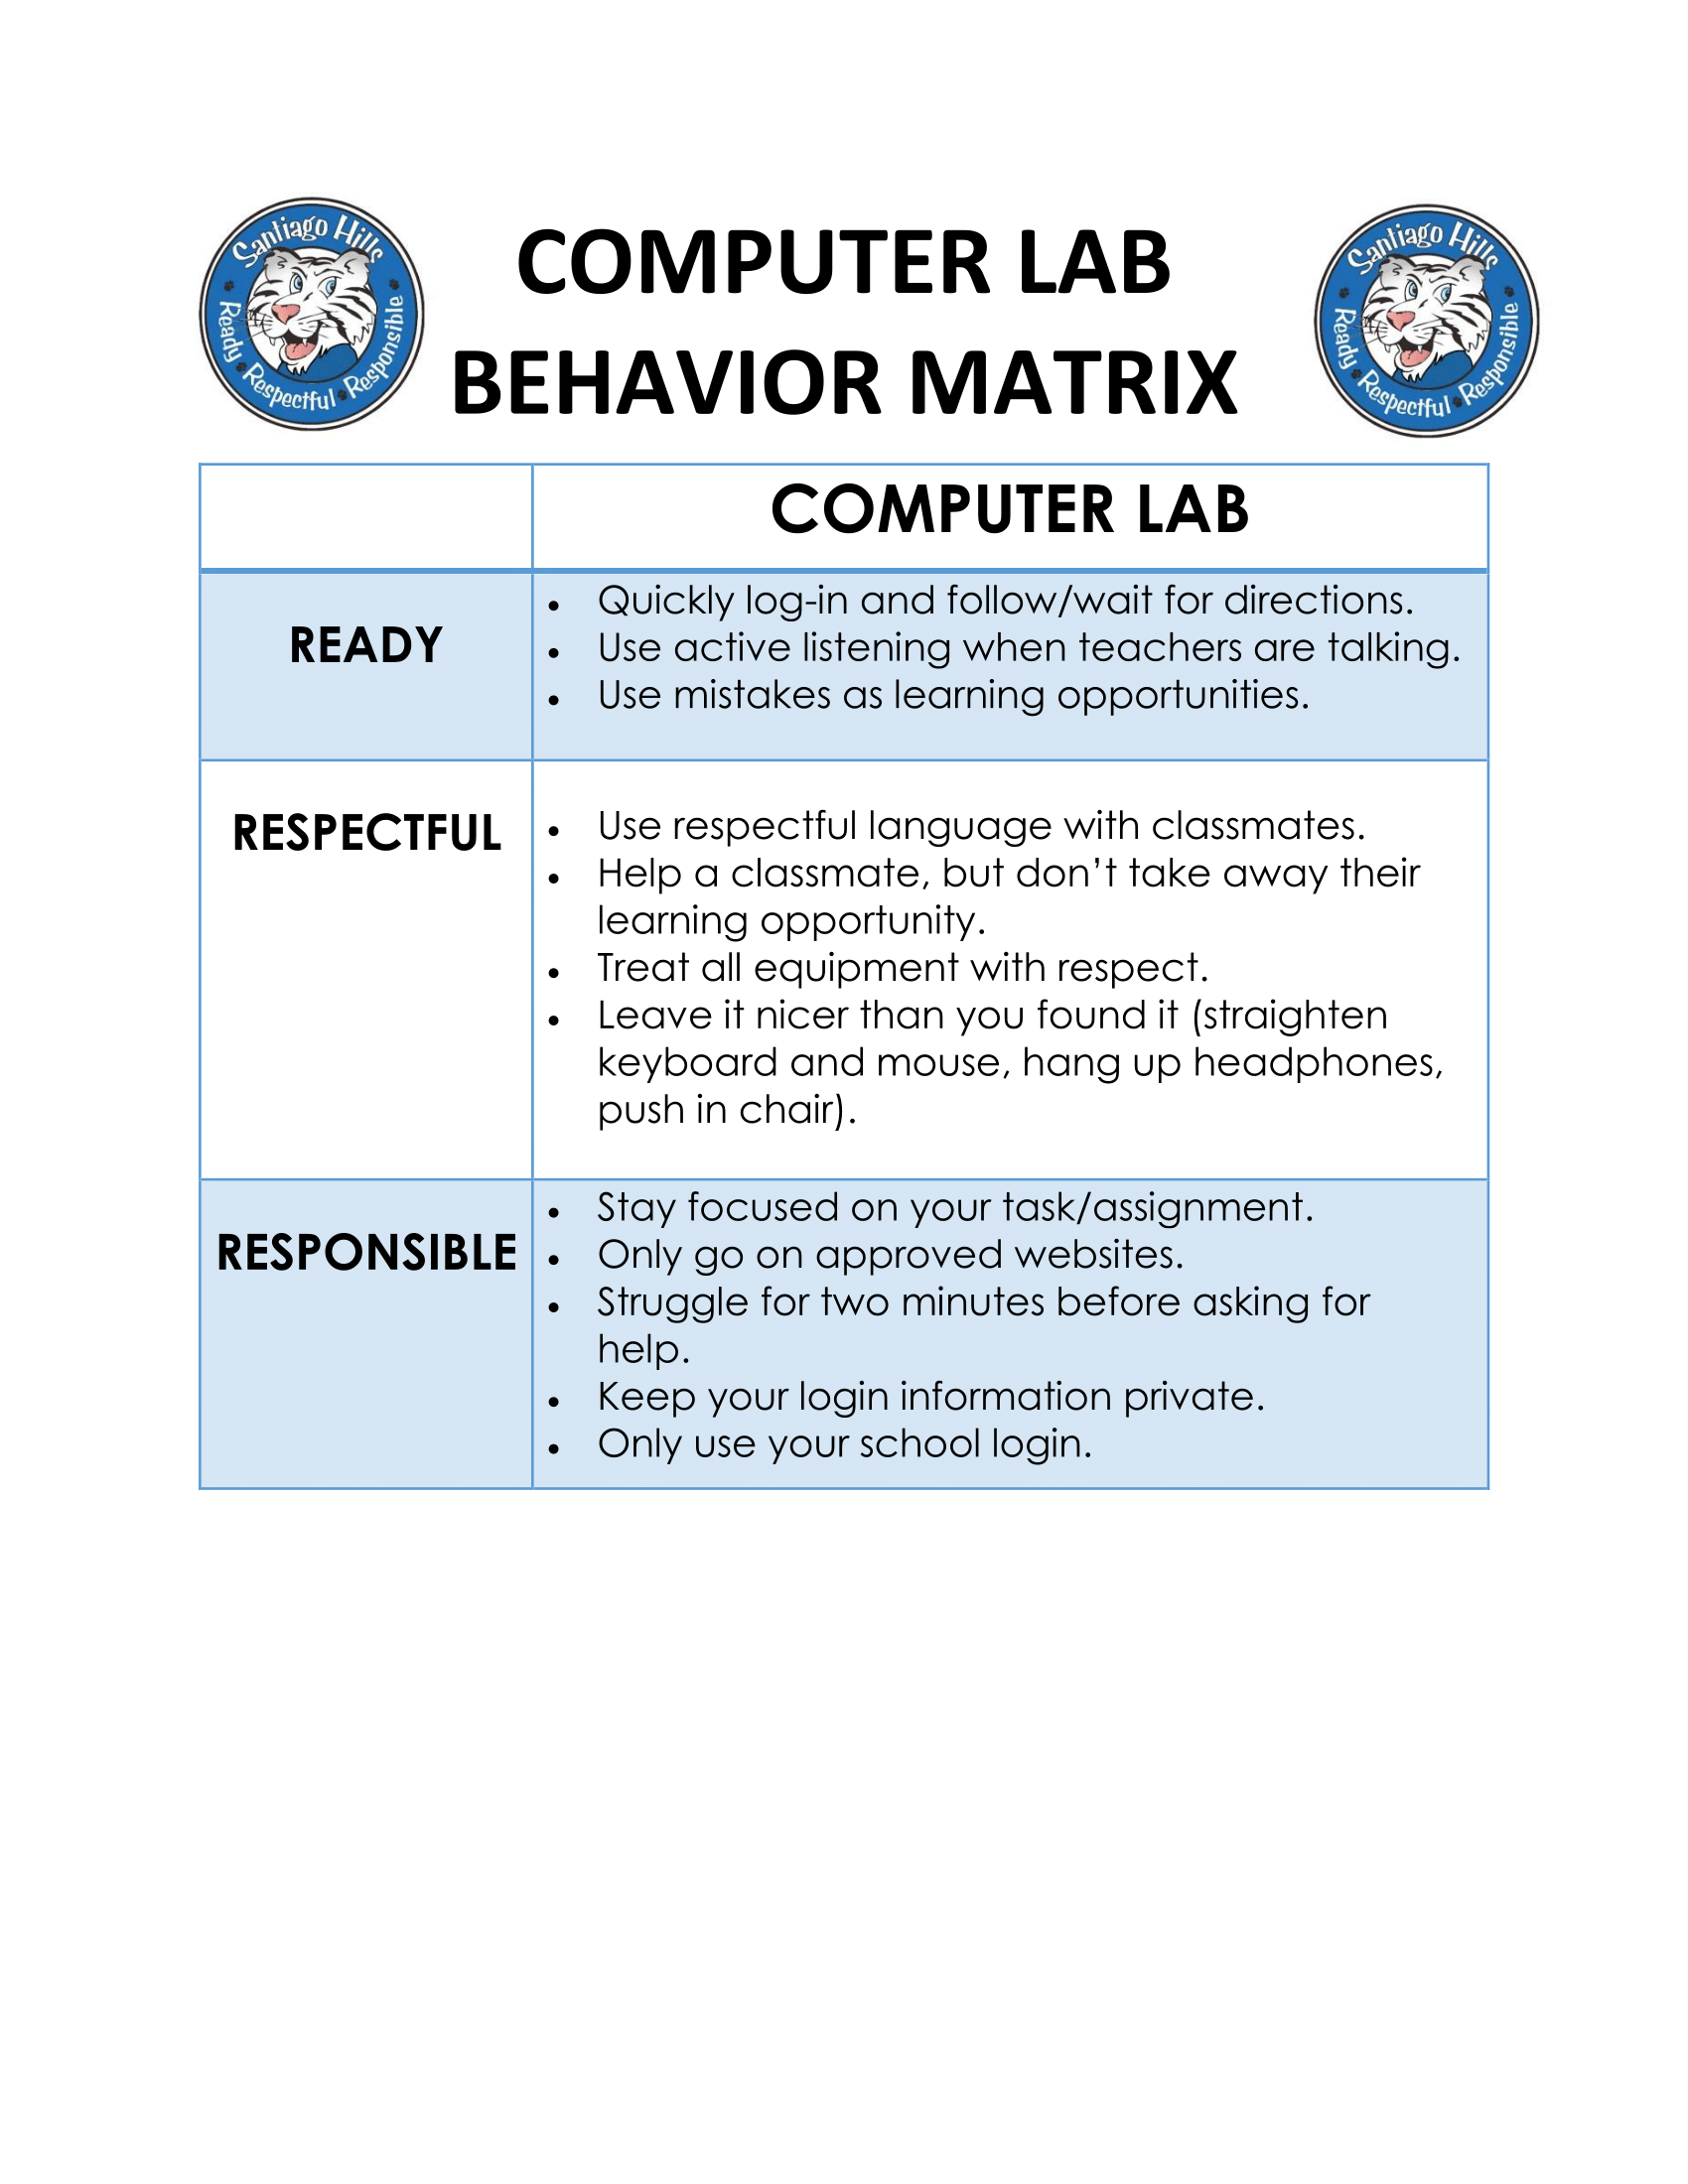 Technology Matrix Computer Lab